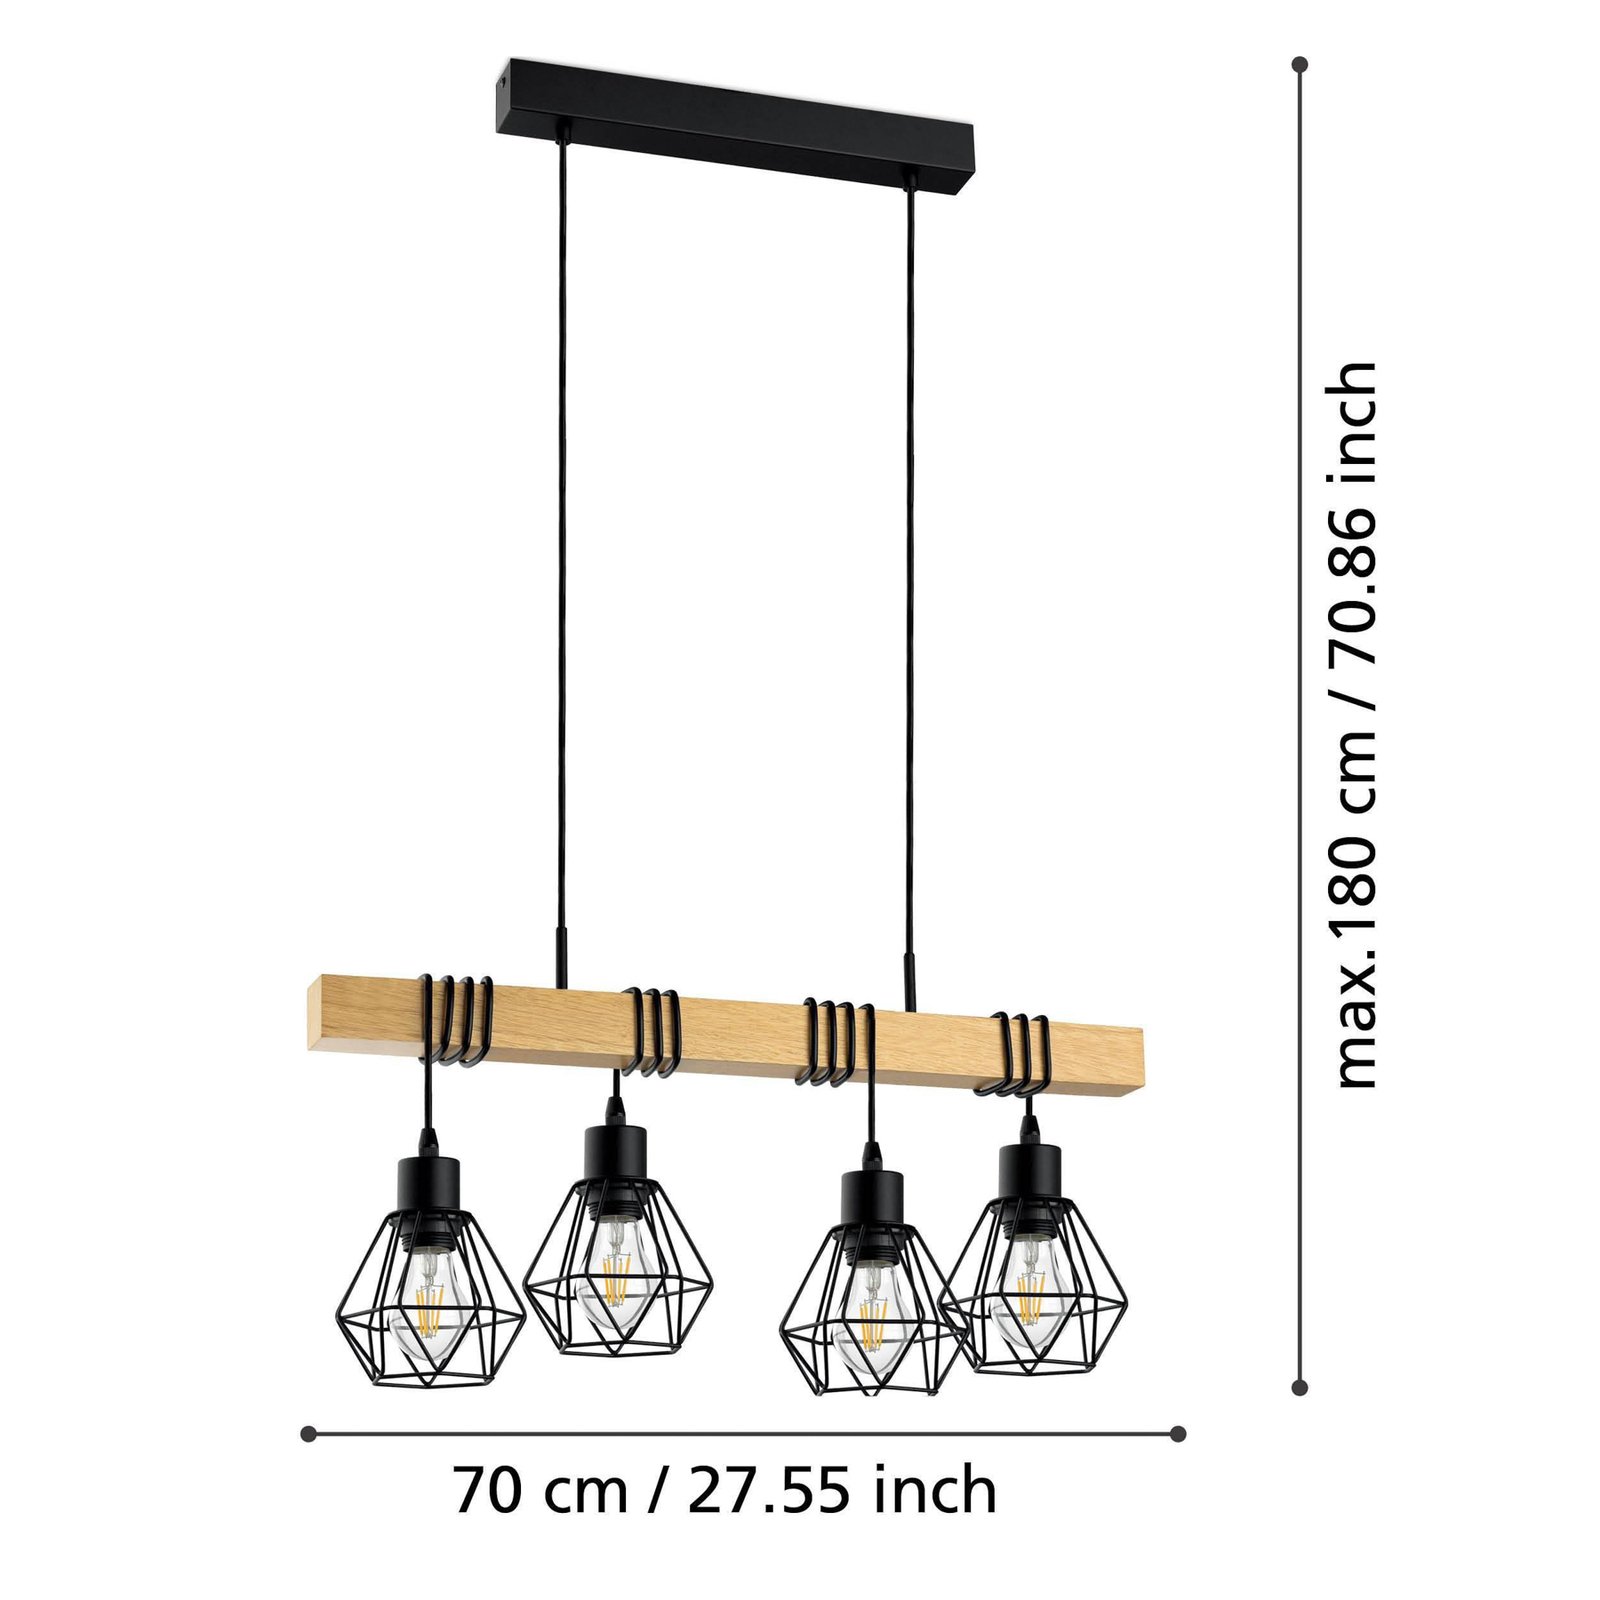 Townshend pendant light, length 70 cm, black/oak, 4-bulb.